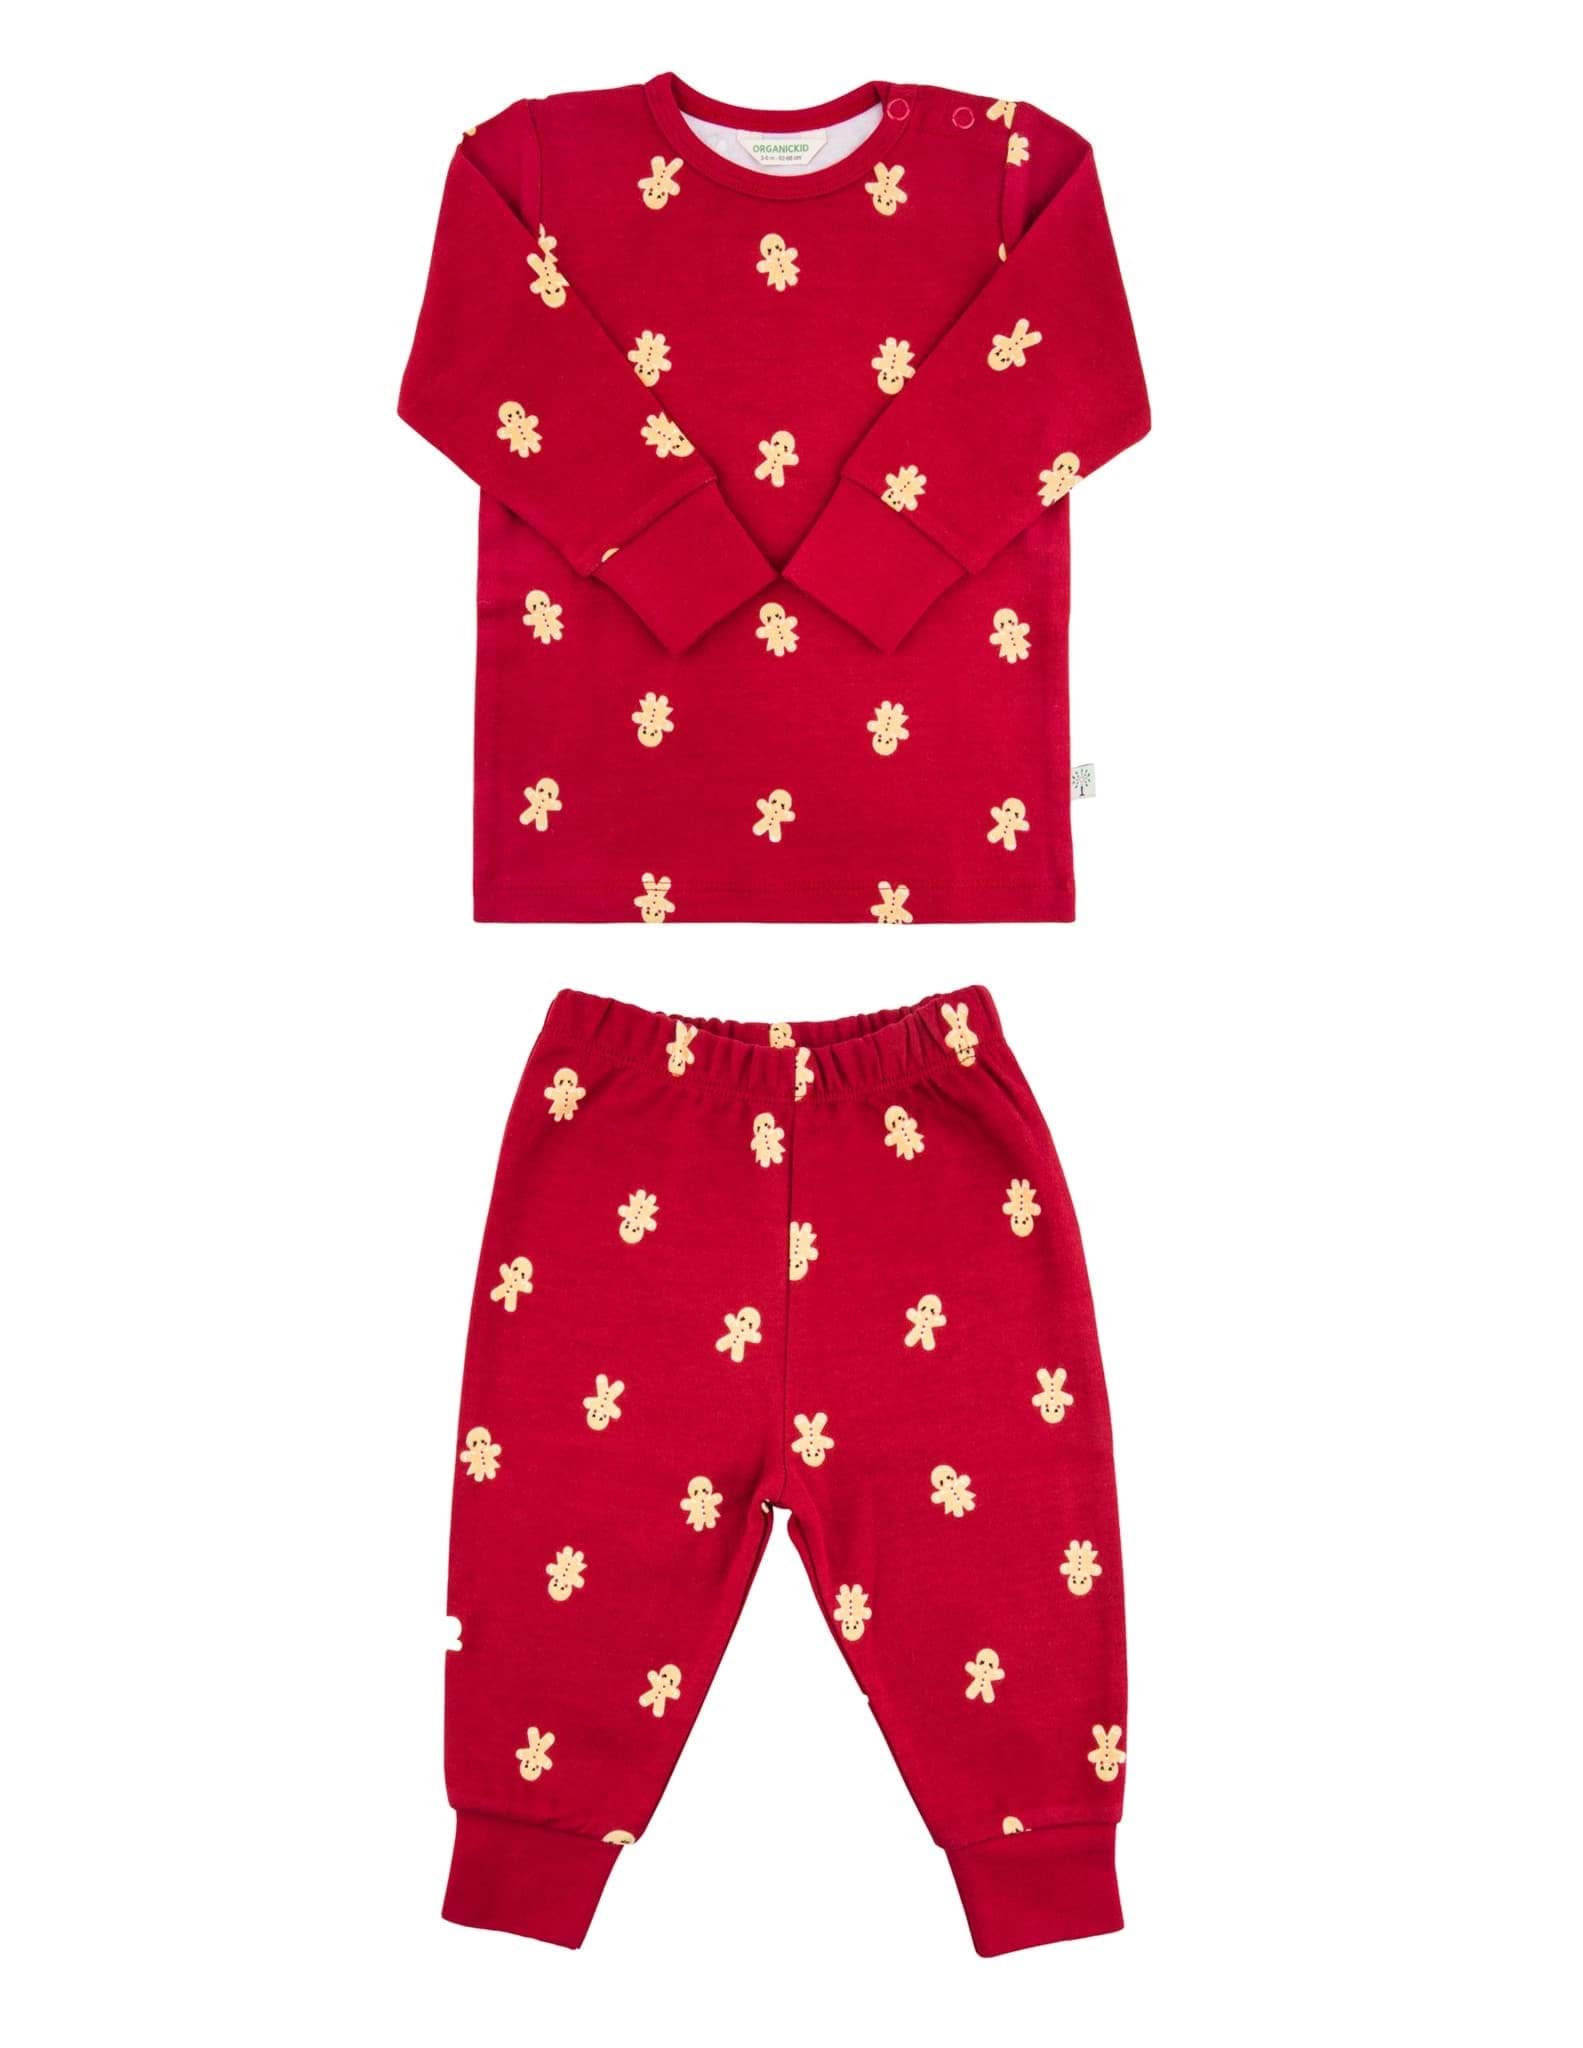 Gingerbread Bebek Pijama Takımı resmi